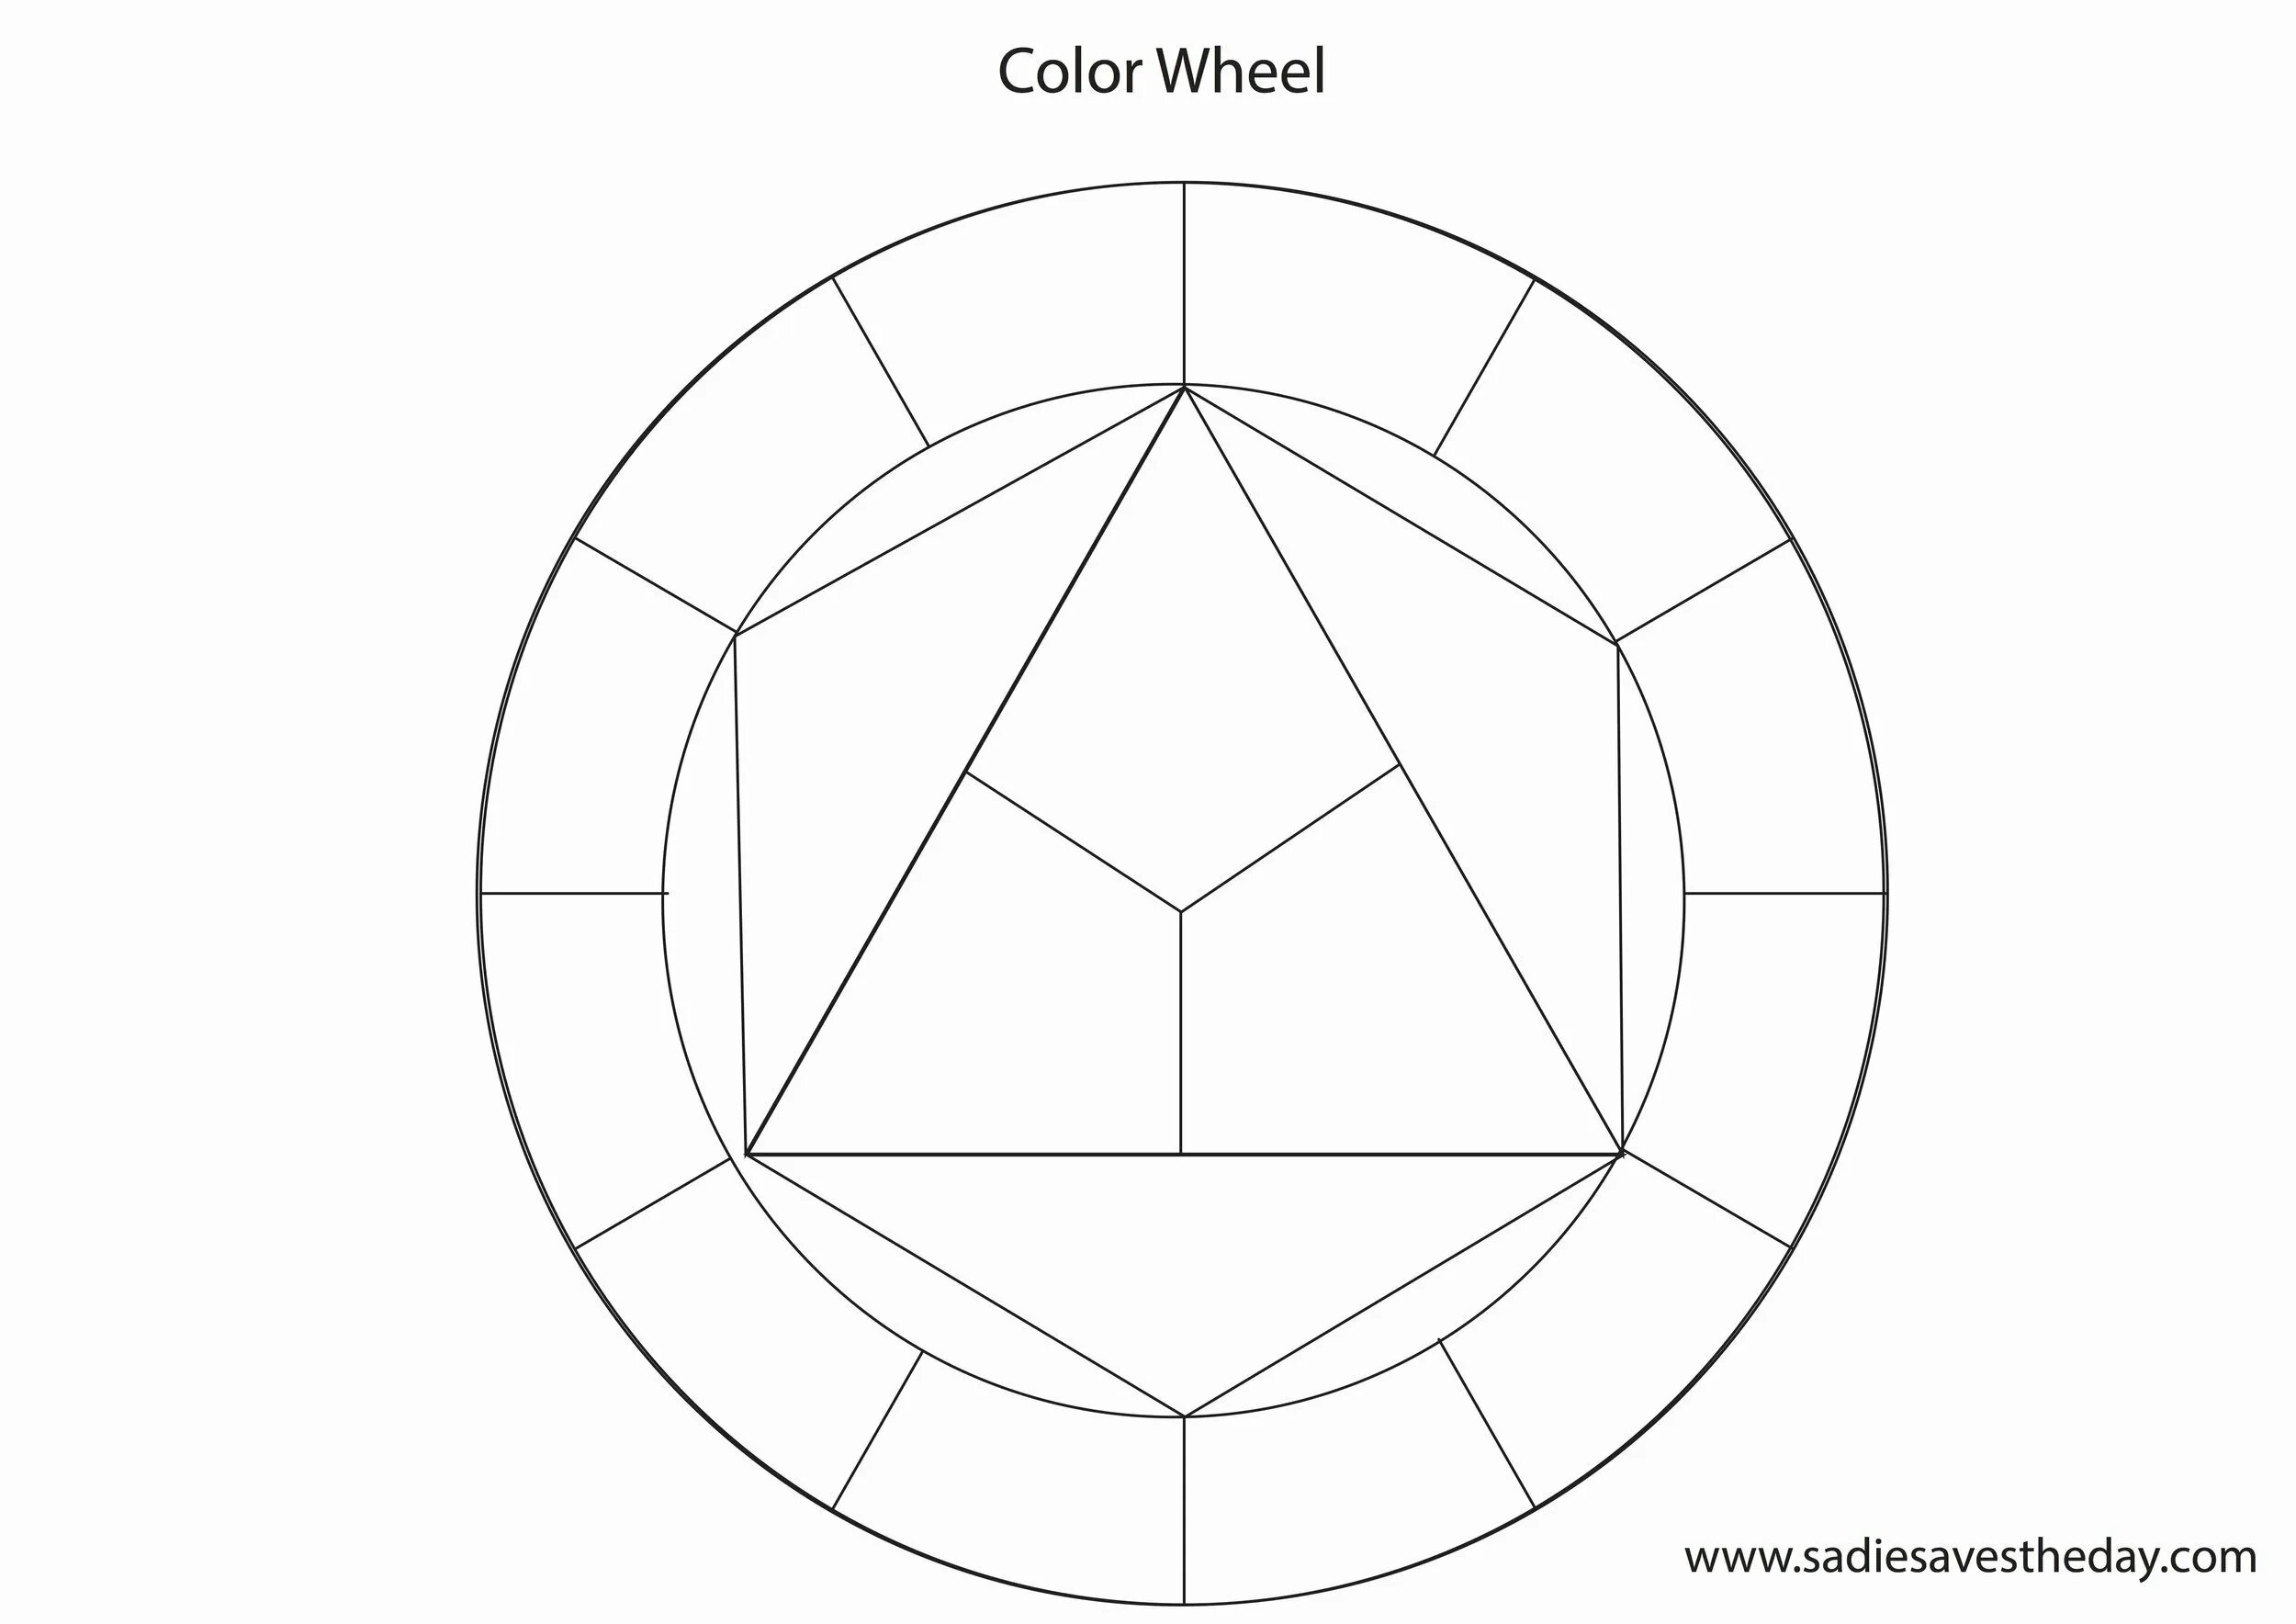 Fun itten color wheel coloring page